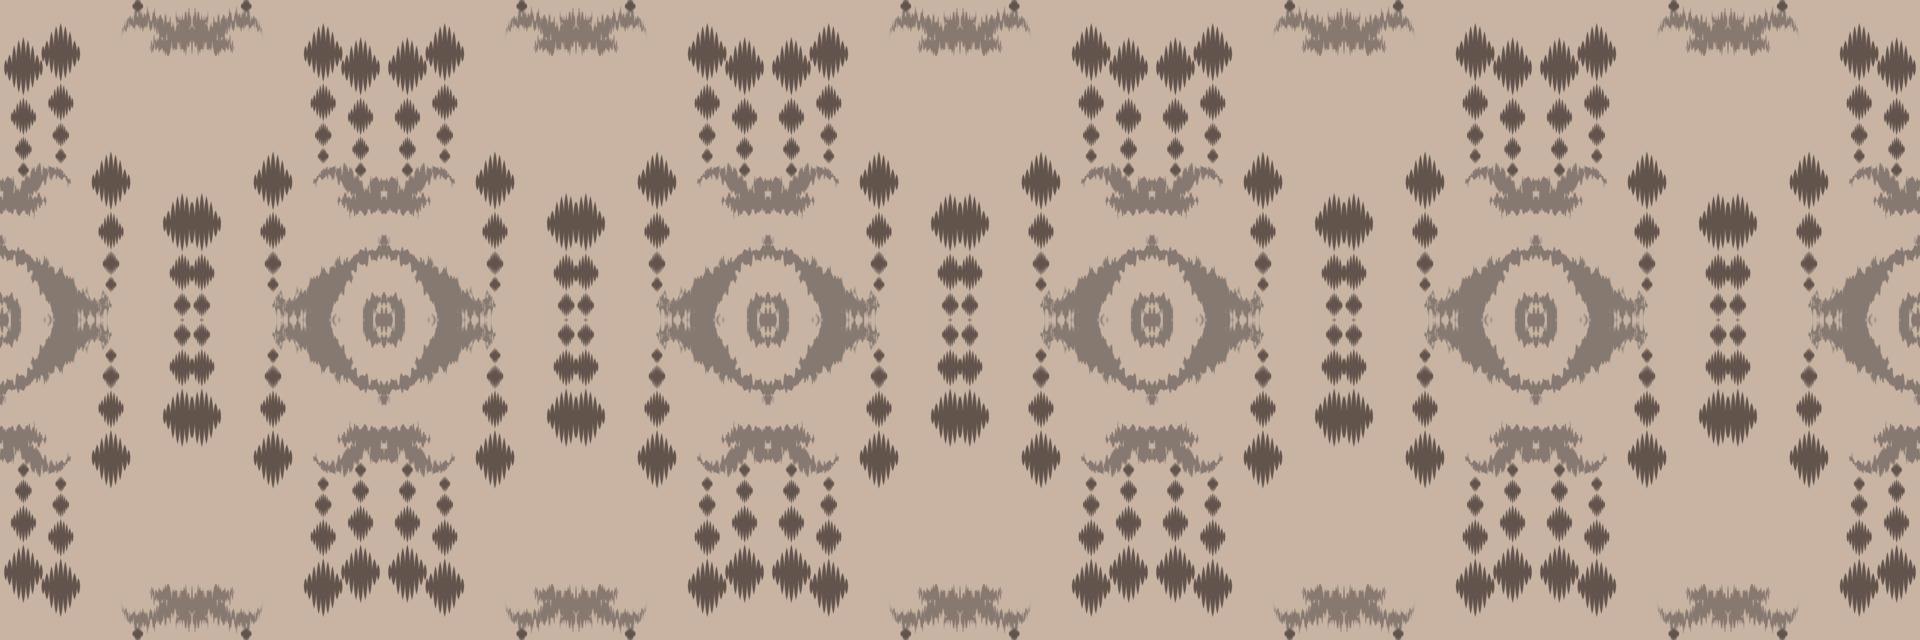 Batik Textile Ethnic ikat stripes seamless pattern digital vector design for Print saree Kurti Borneo Fabric border brush symbols swatches cotton